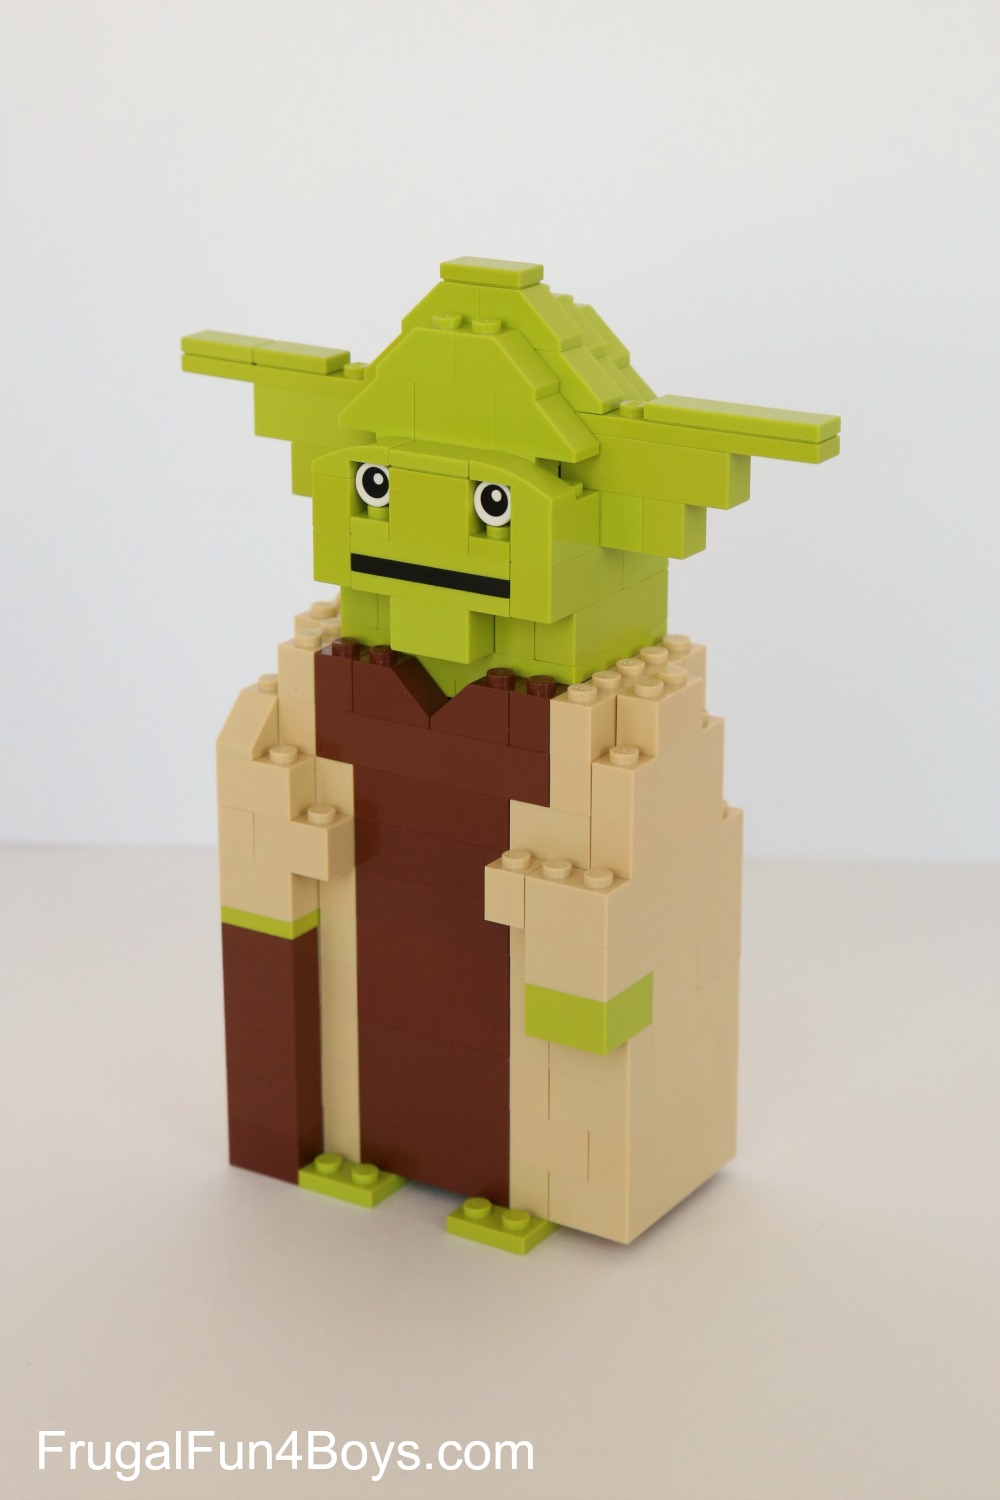 LEGO Yoda Building Instructions